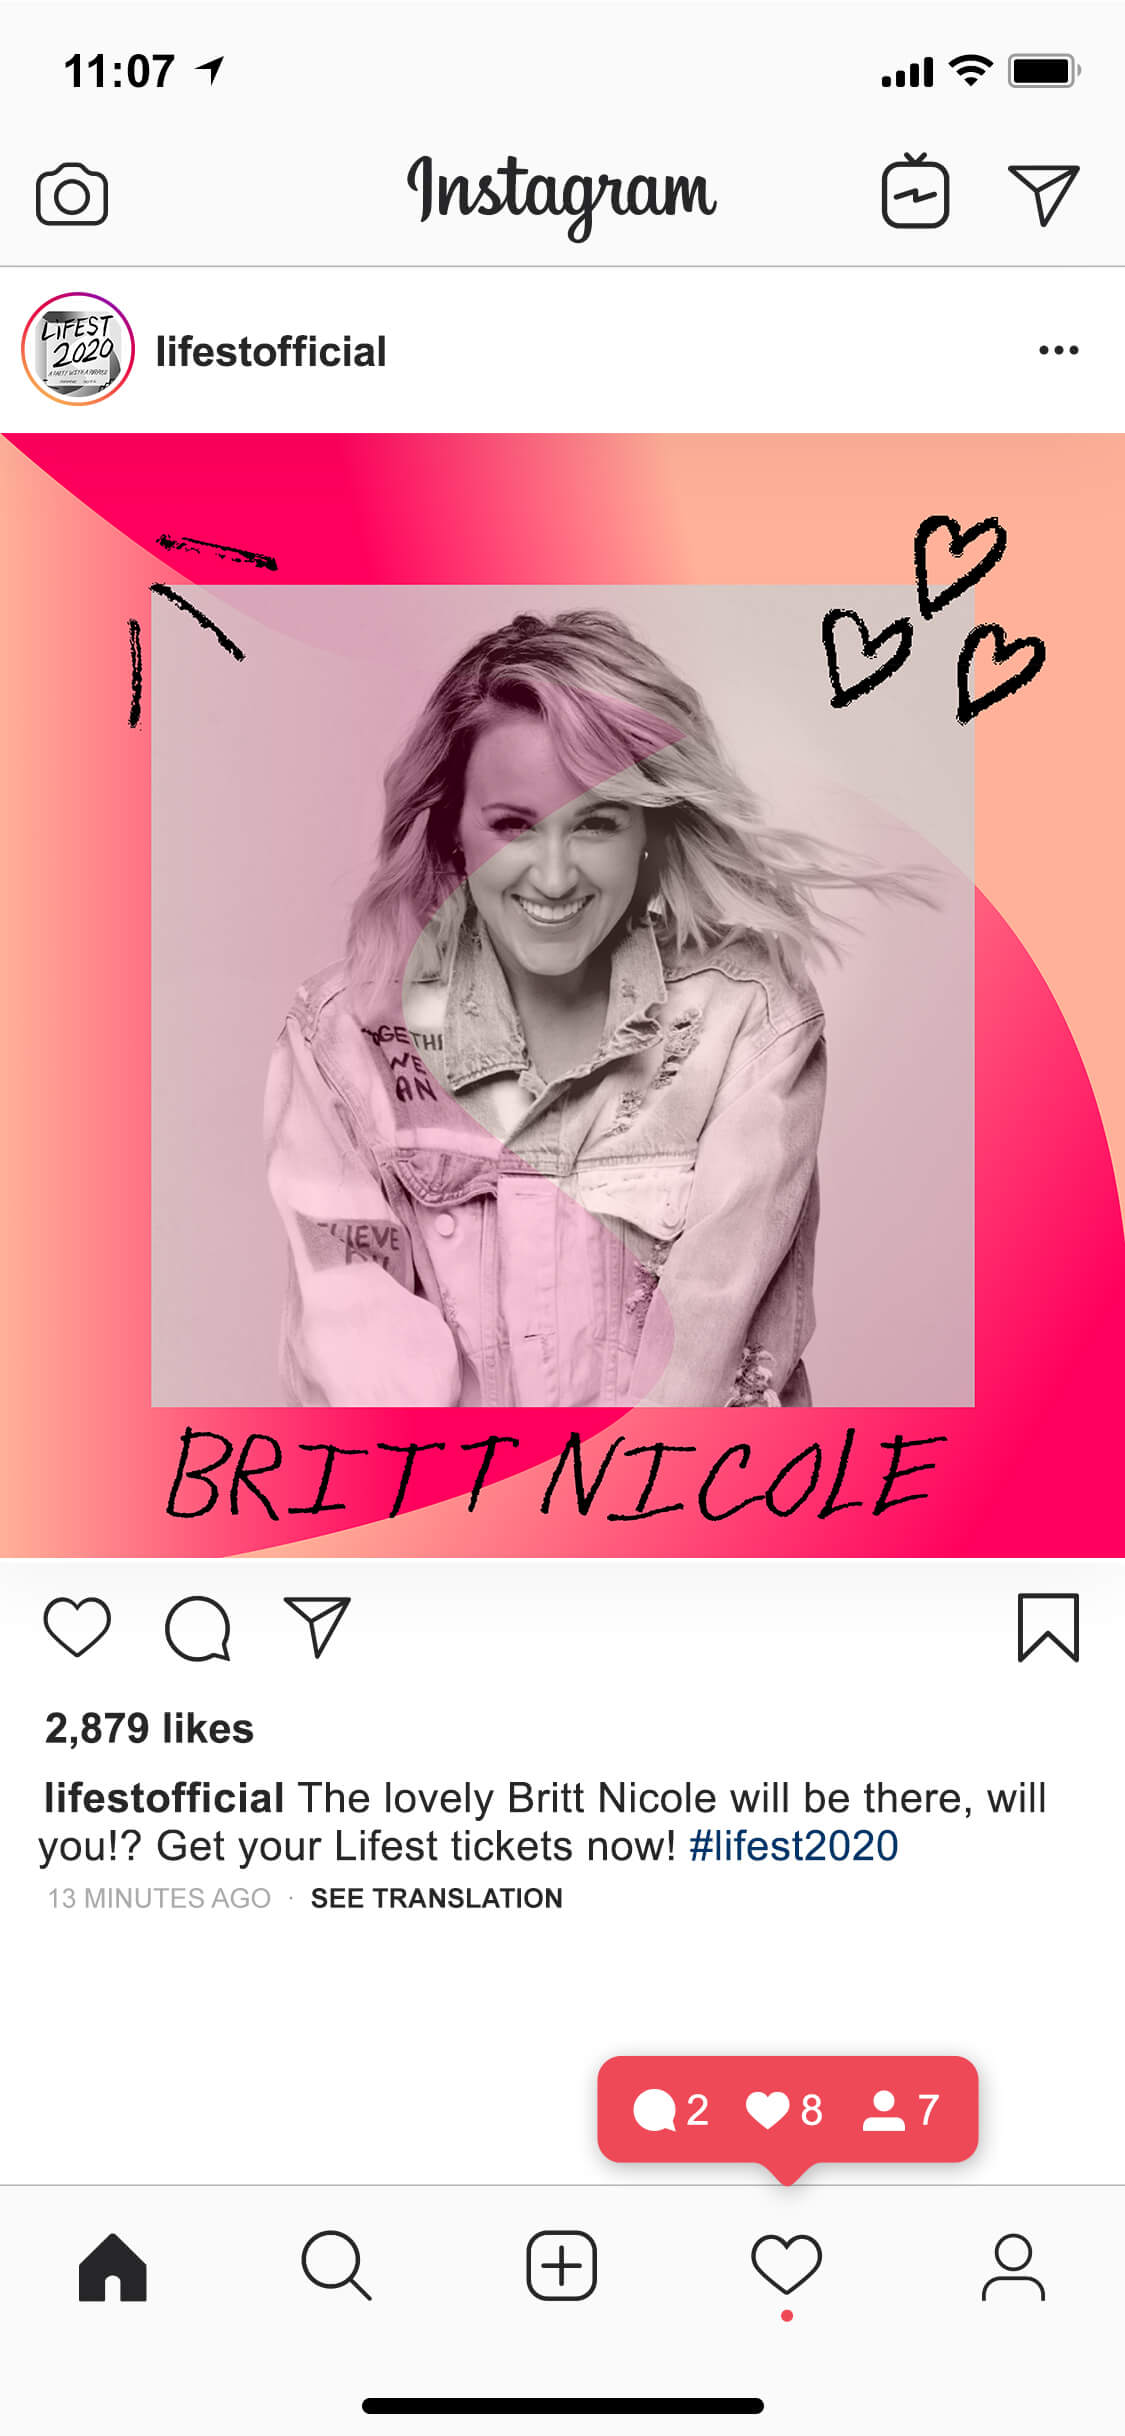 Lifest neon design Instagram post 4 mockup, featuring music artist Britt Nicole